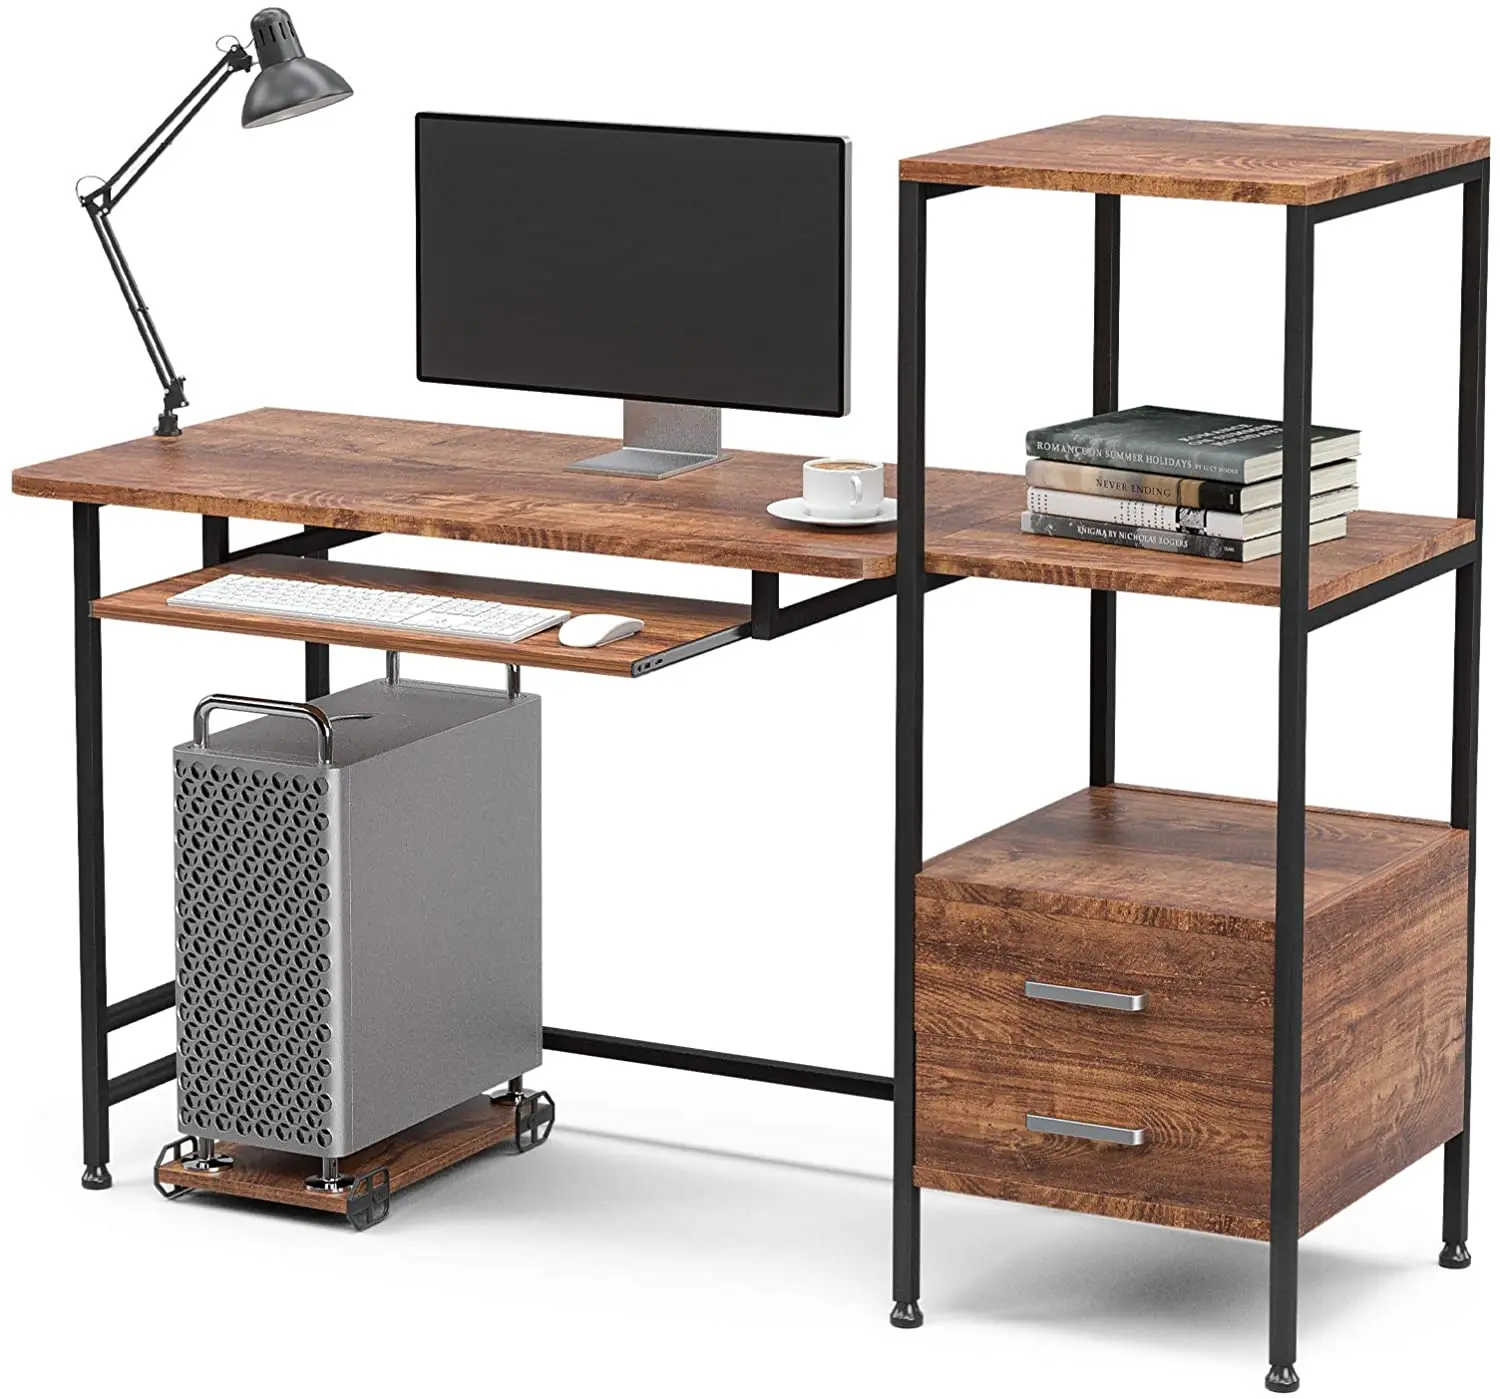 Modern Simple Design Home Office Desk 55" L Computer Table Desktop Study Writing 